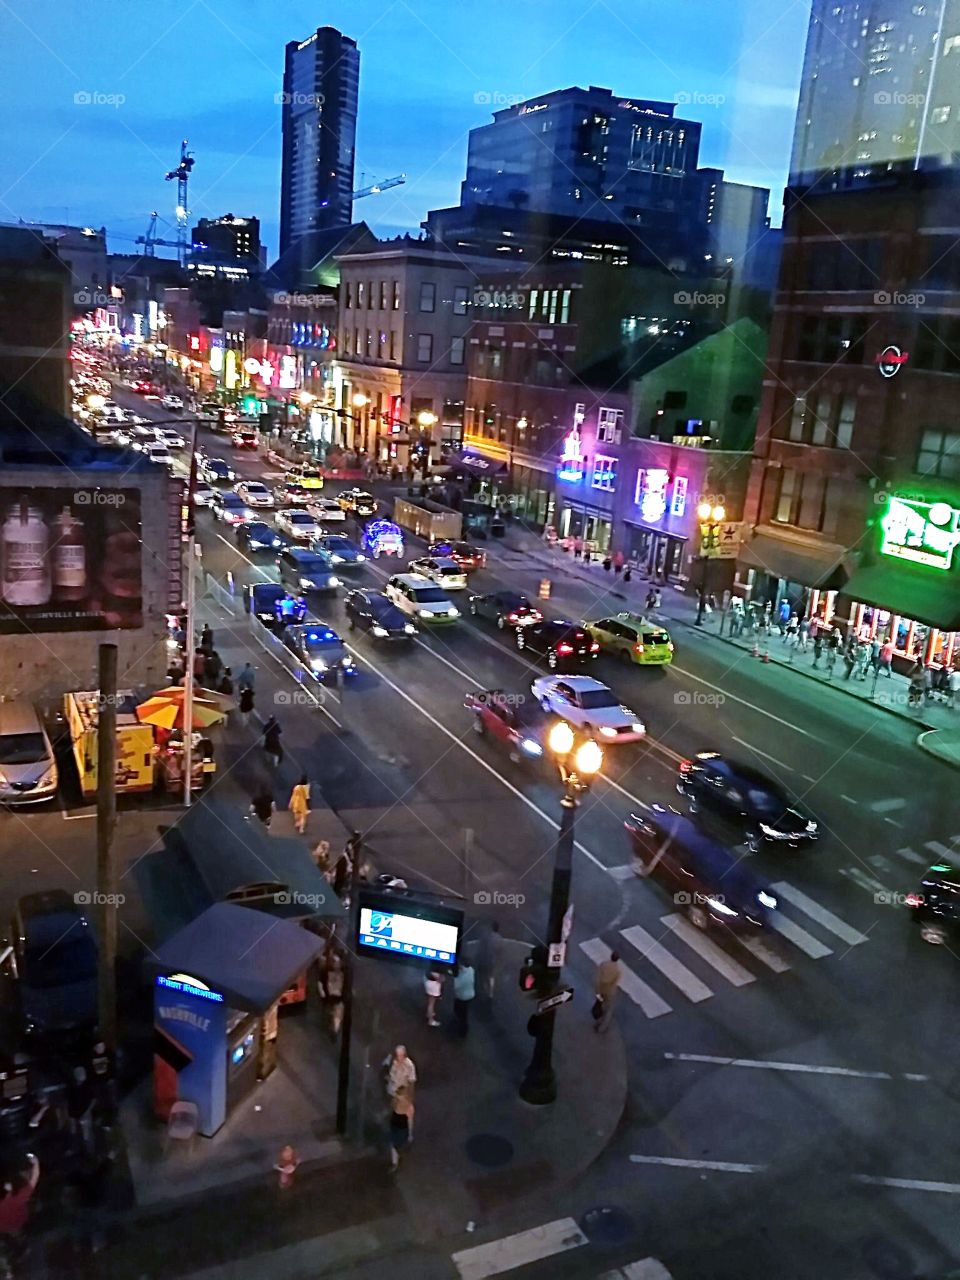 Downtown Nashville #TheNightLife 